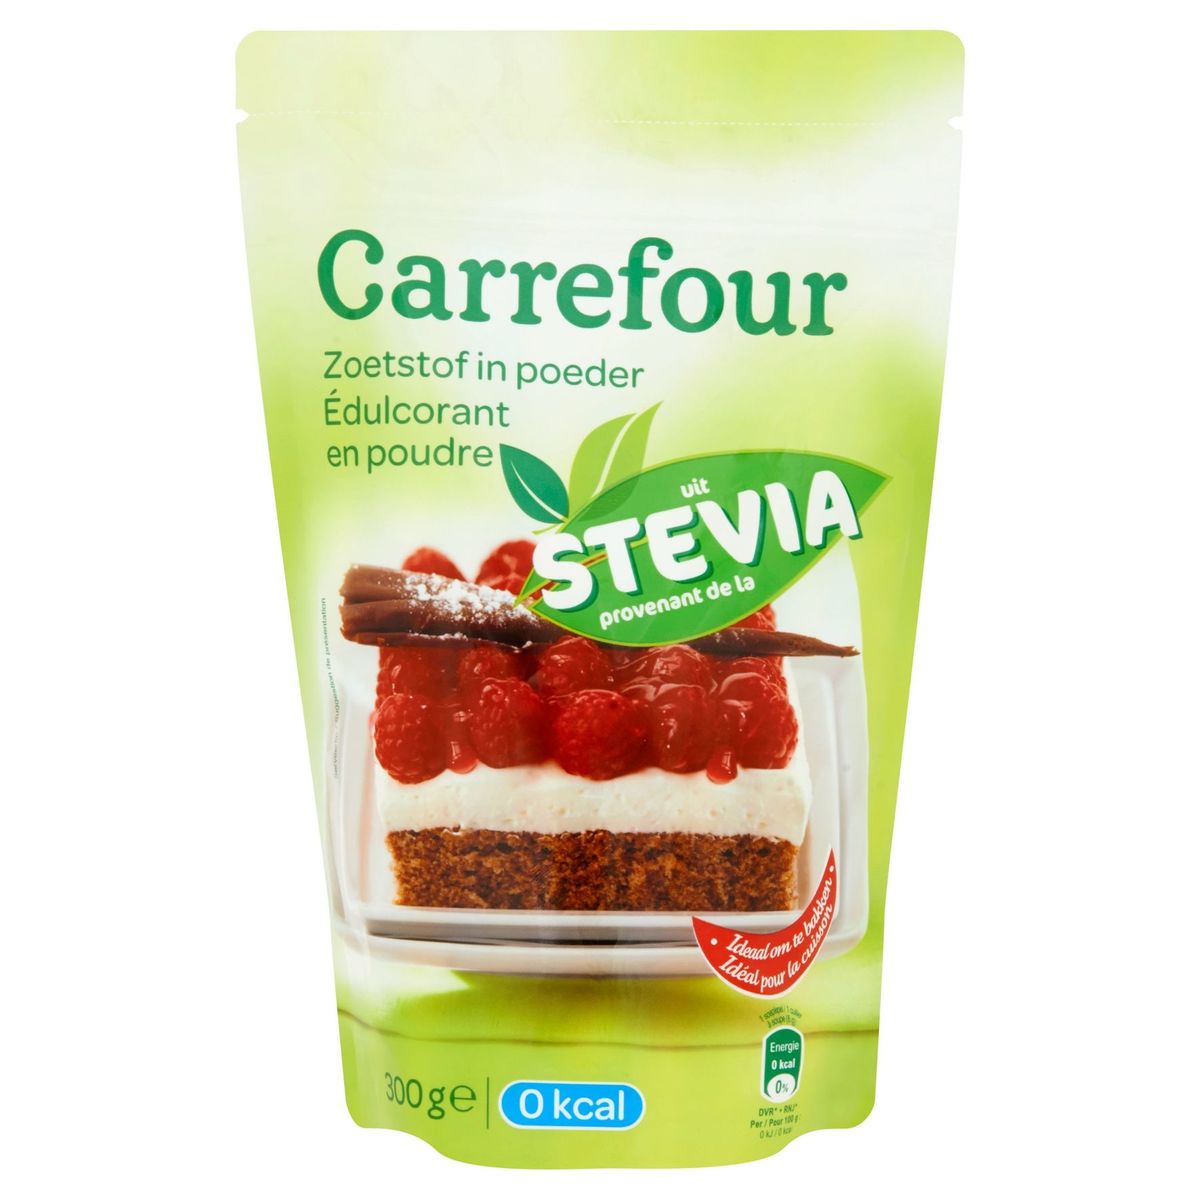 Carrefour Zoetstof in Poeder uit Stevia 300 g